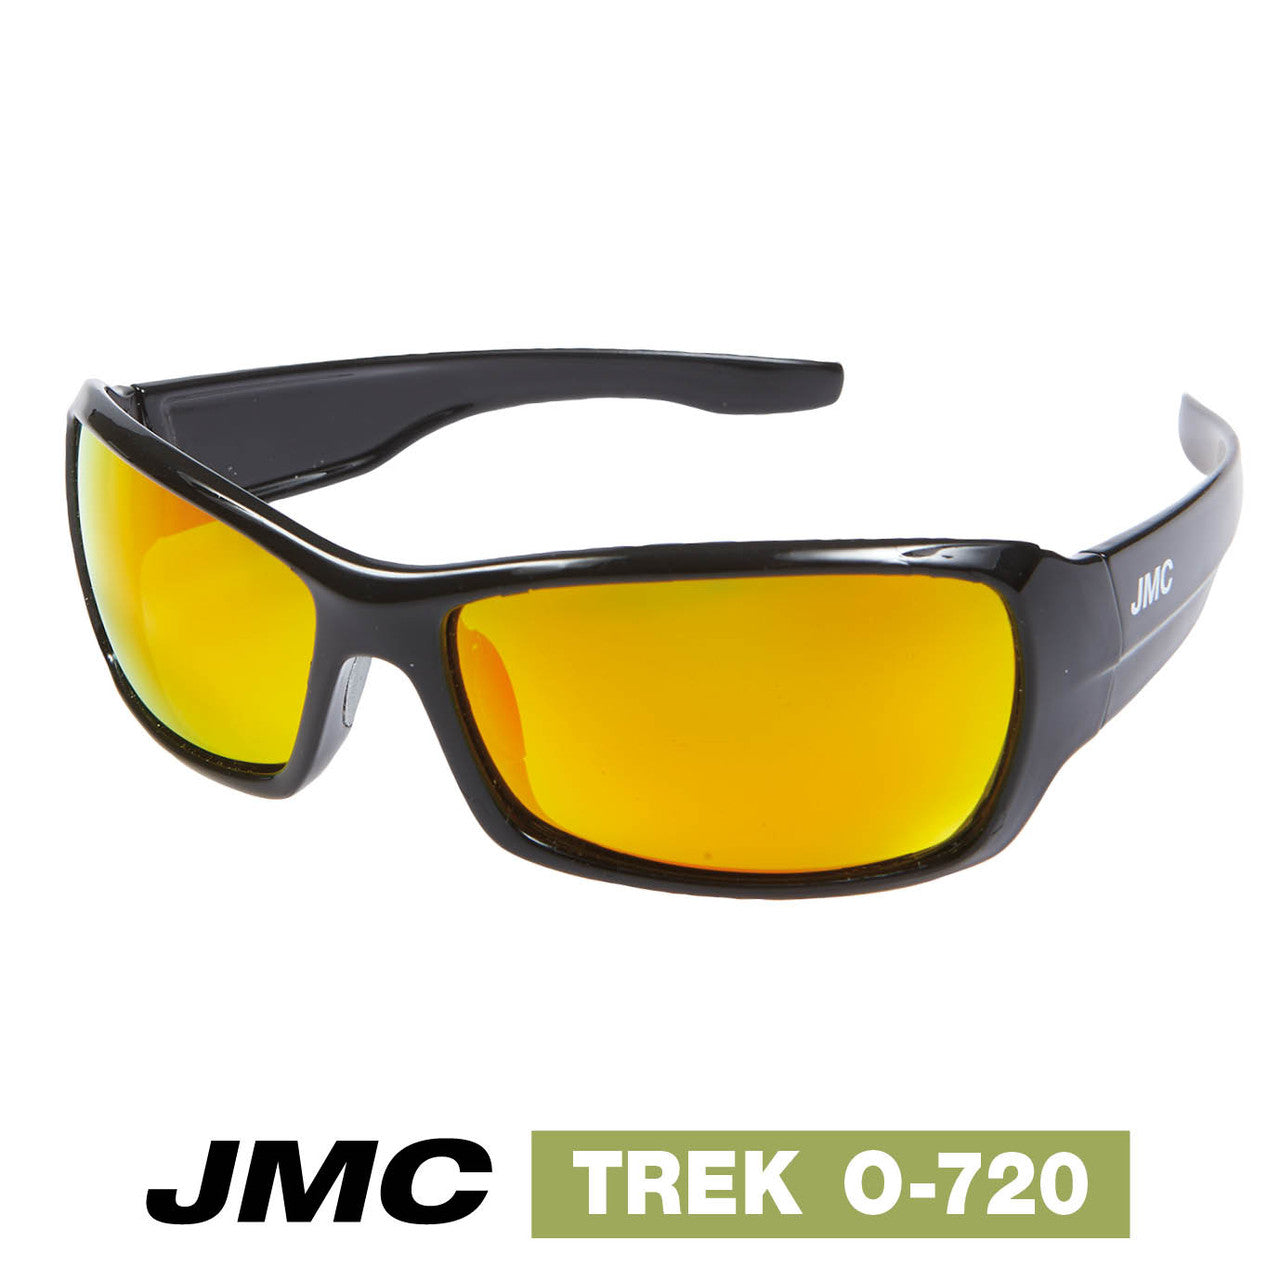 JMC Treck O-720 Sunglasses